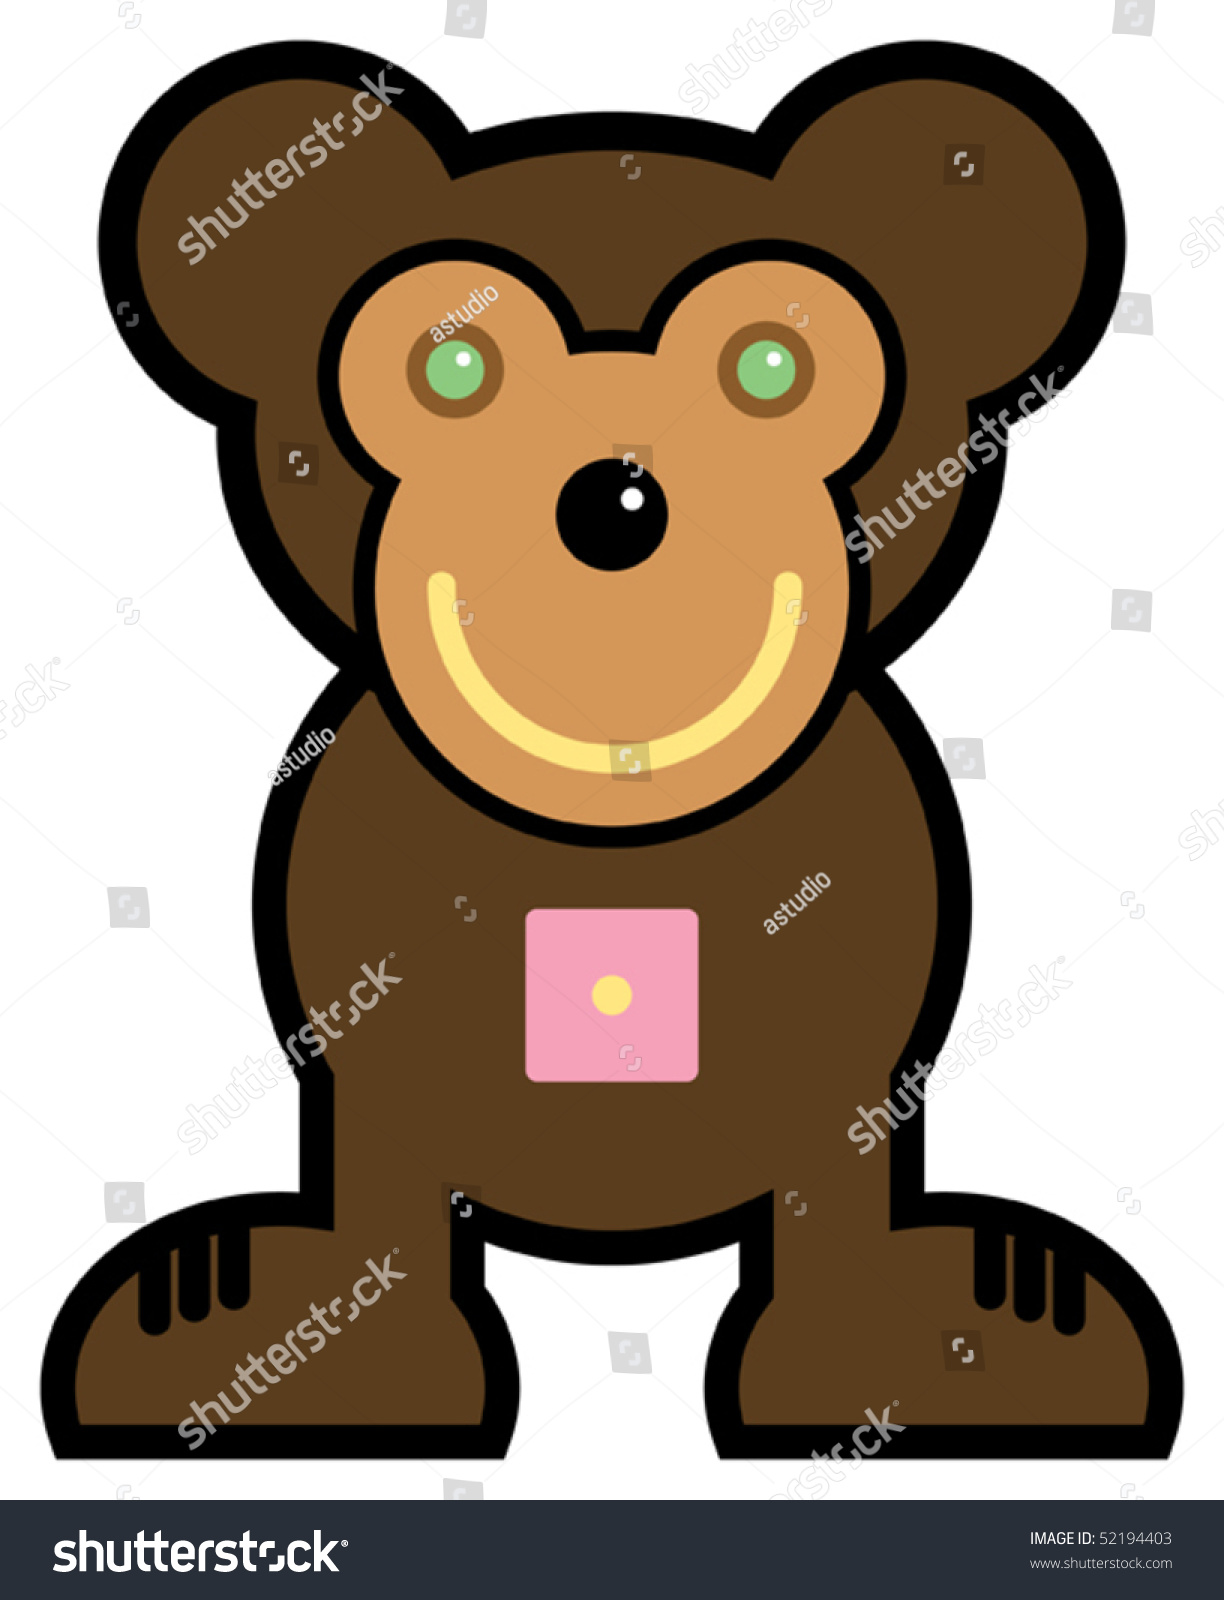 Cartoon Monkey, Vector Illustration - 52194403 : Shutterstock